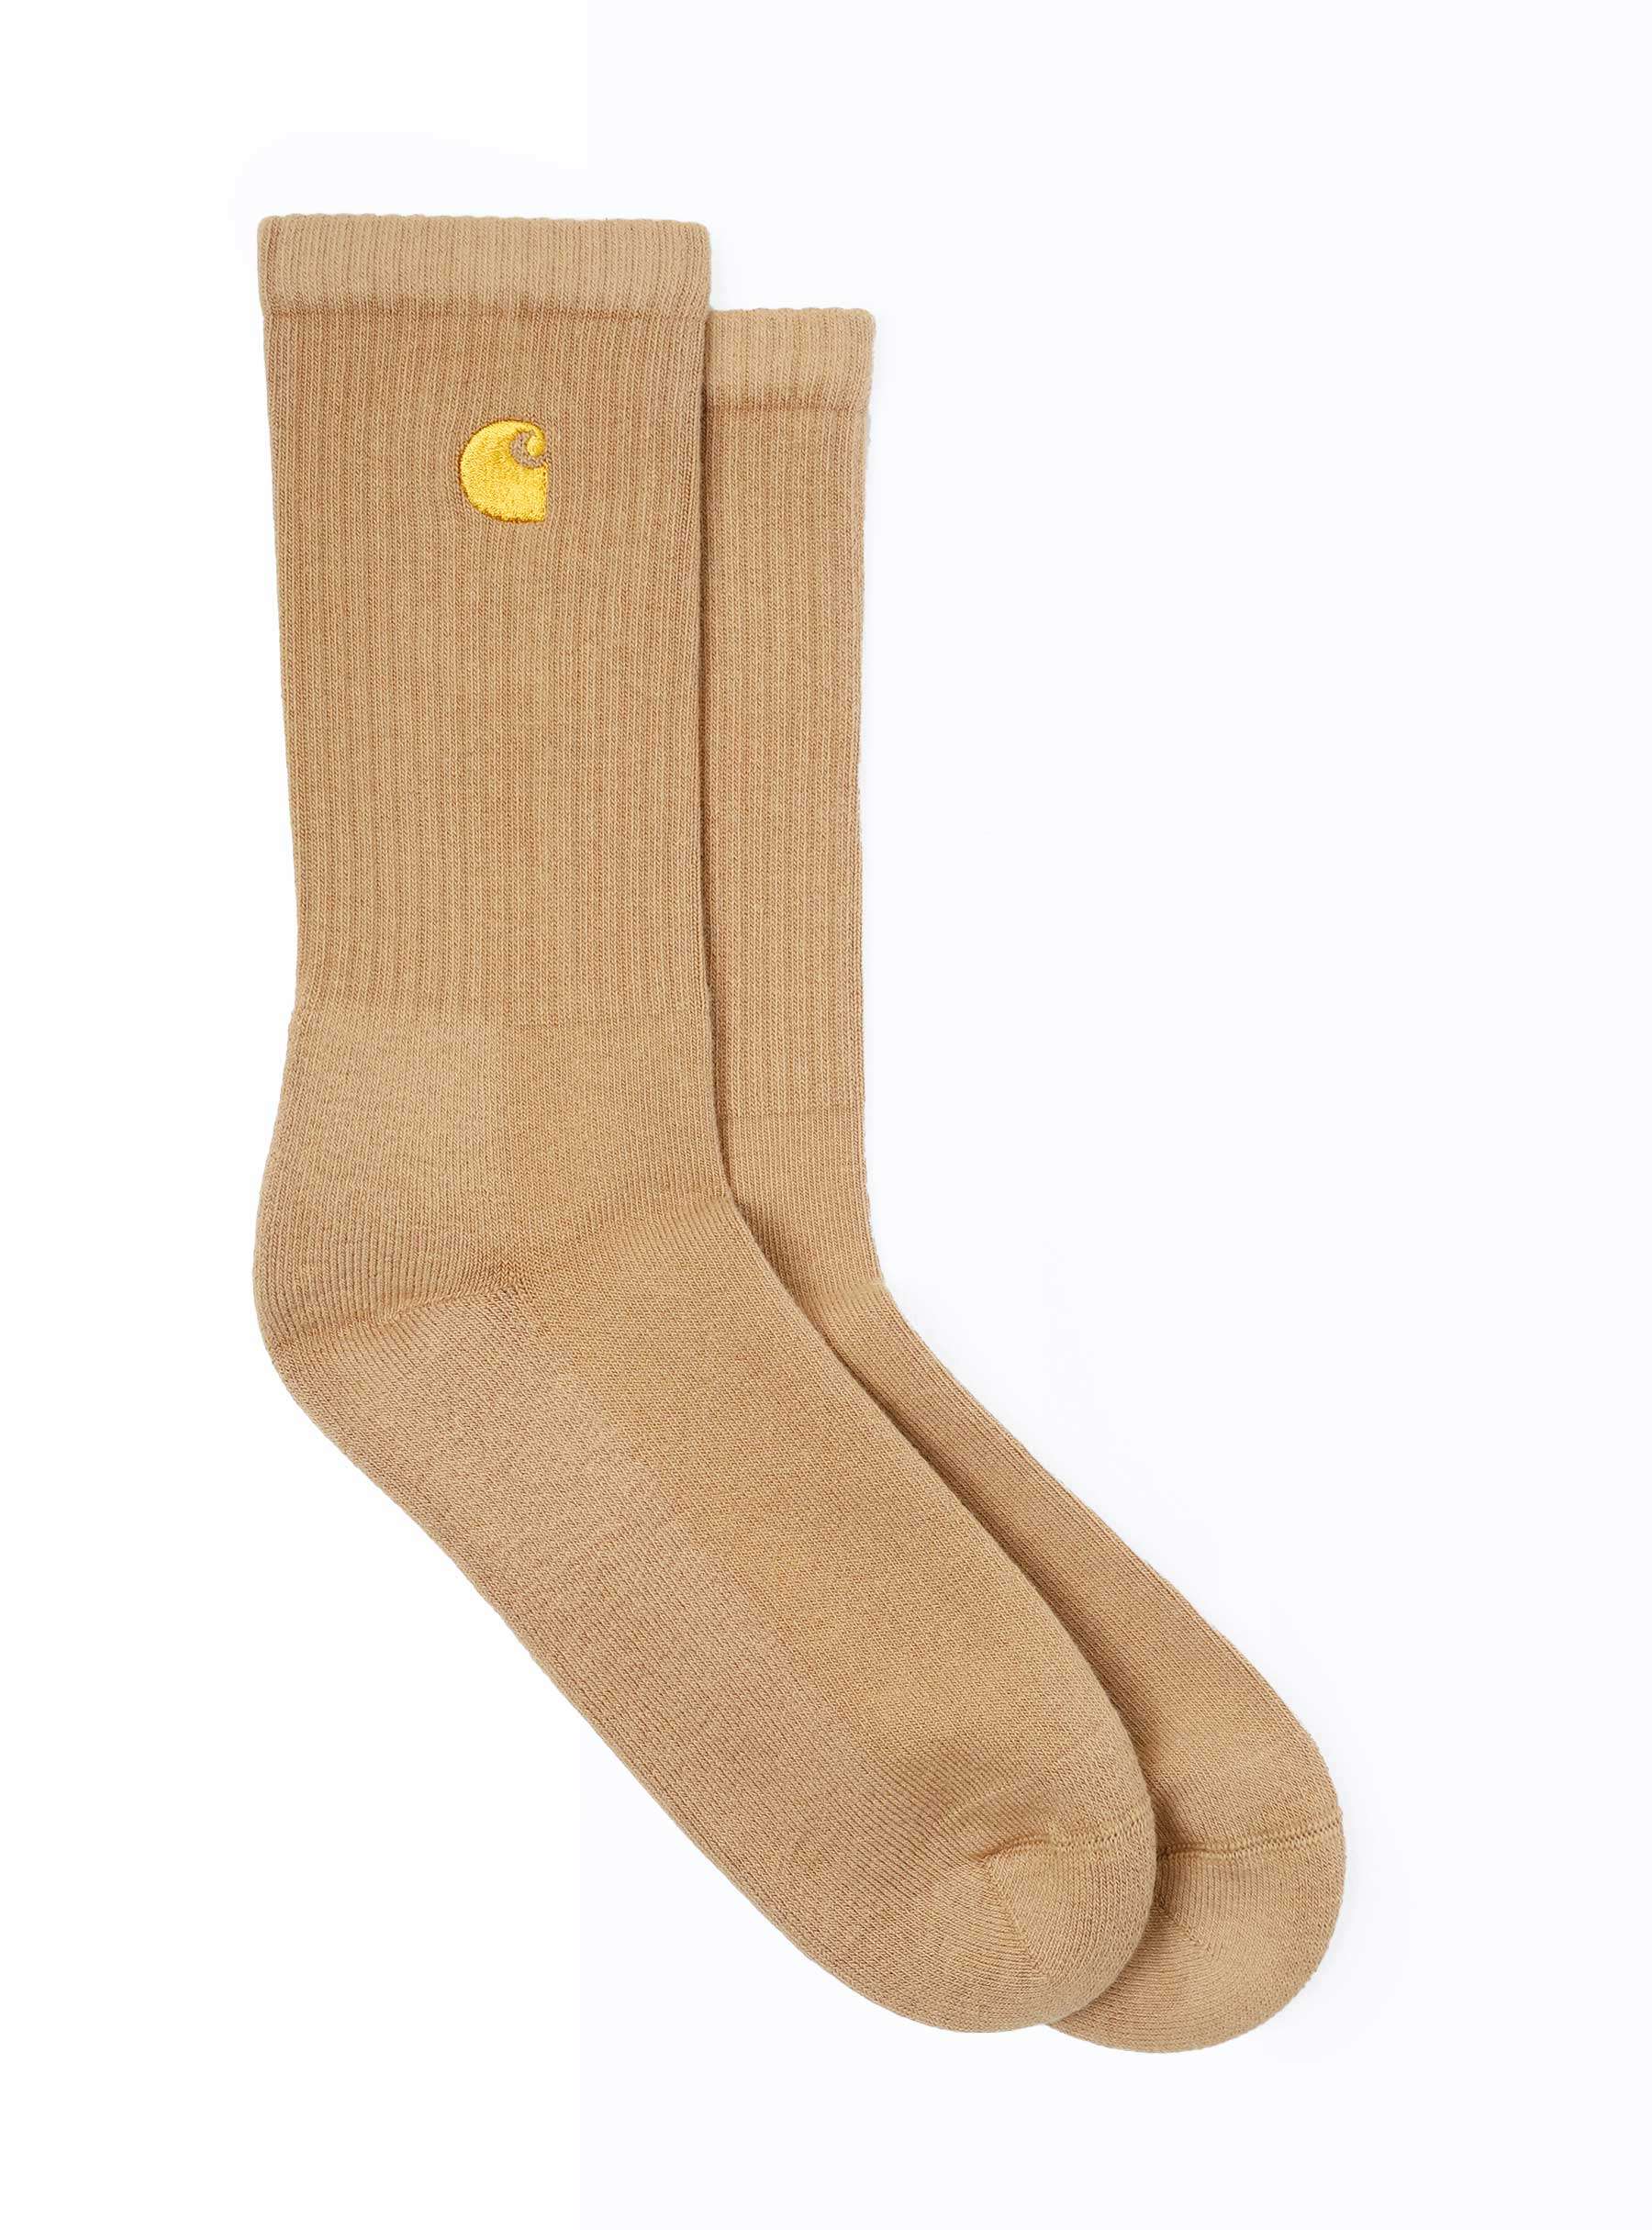 Chase Socks Peanut Gold I029421-2GQXX